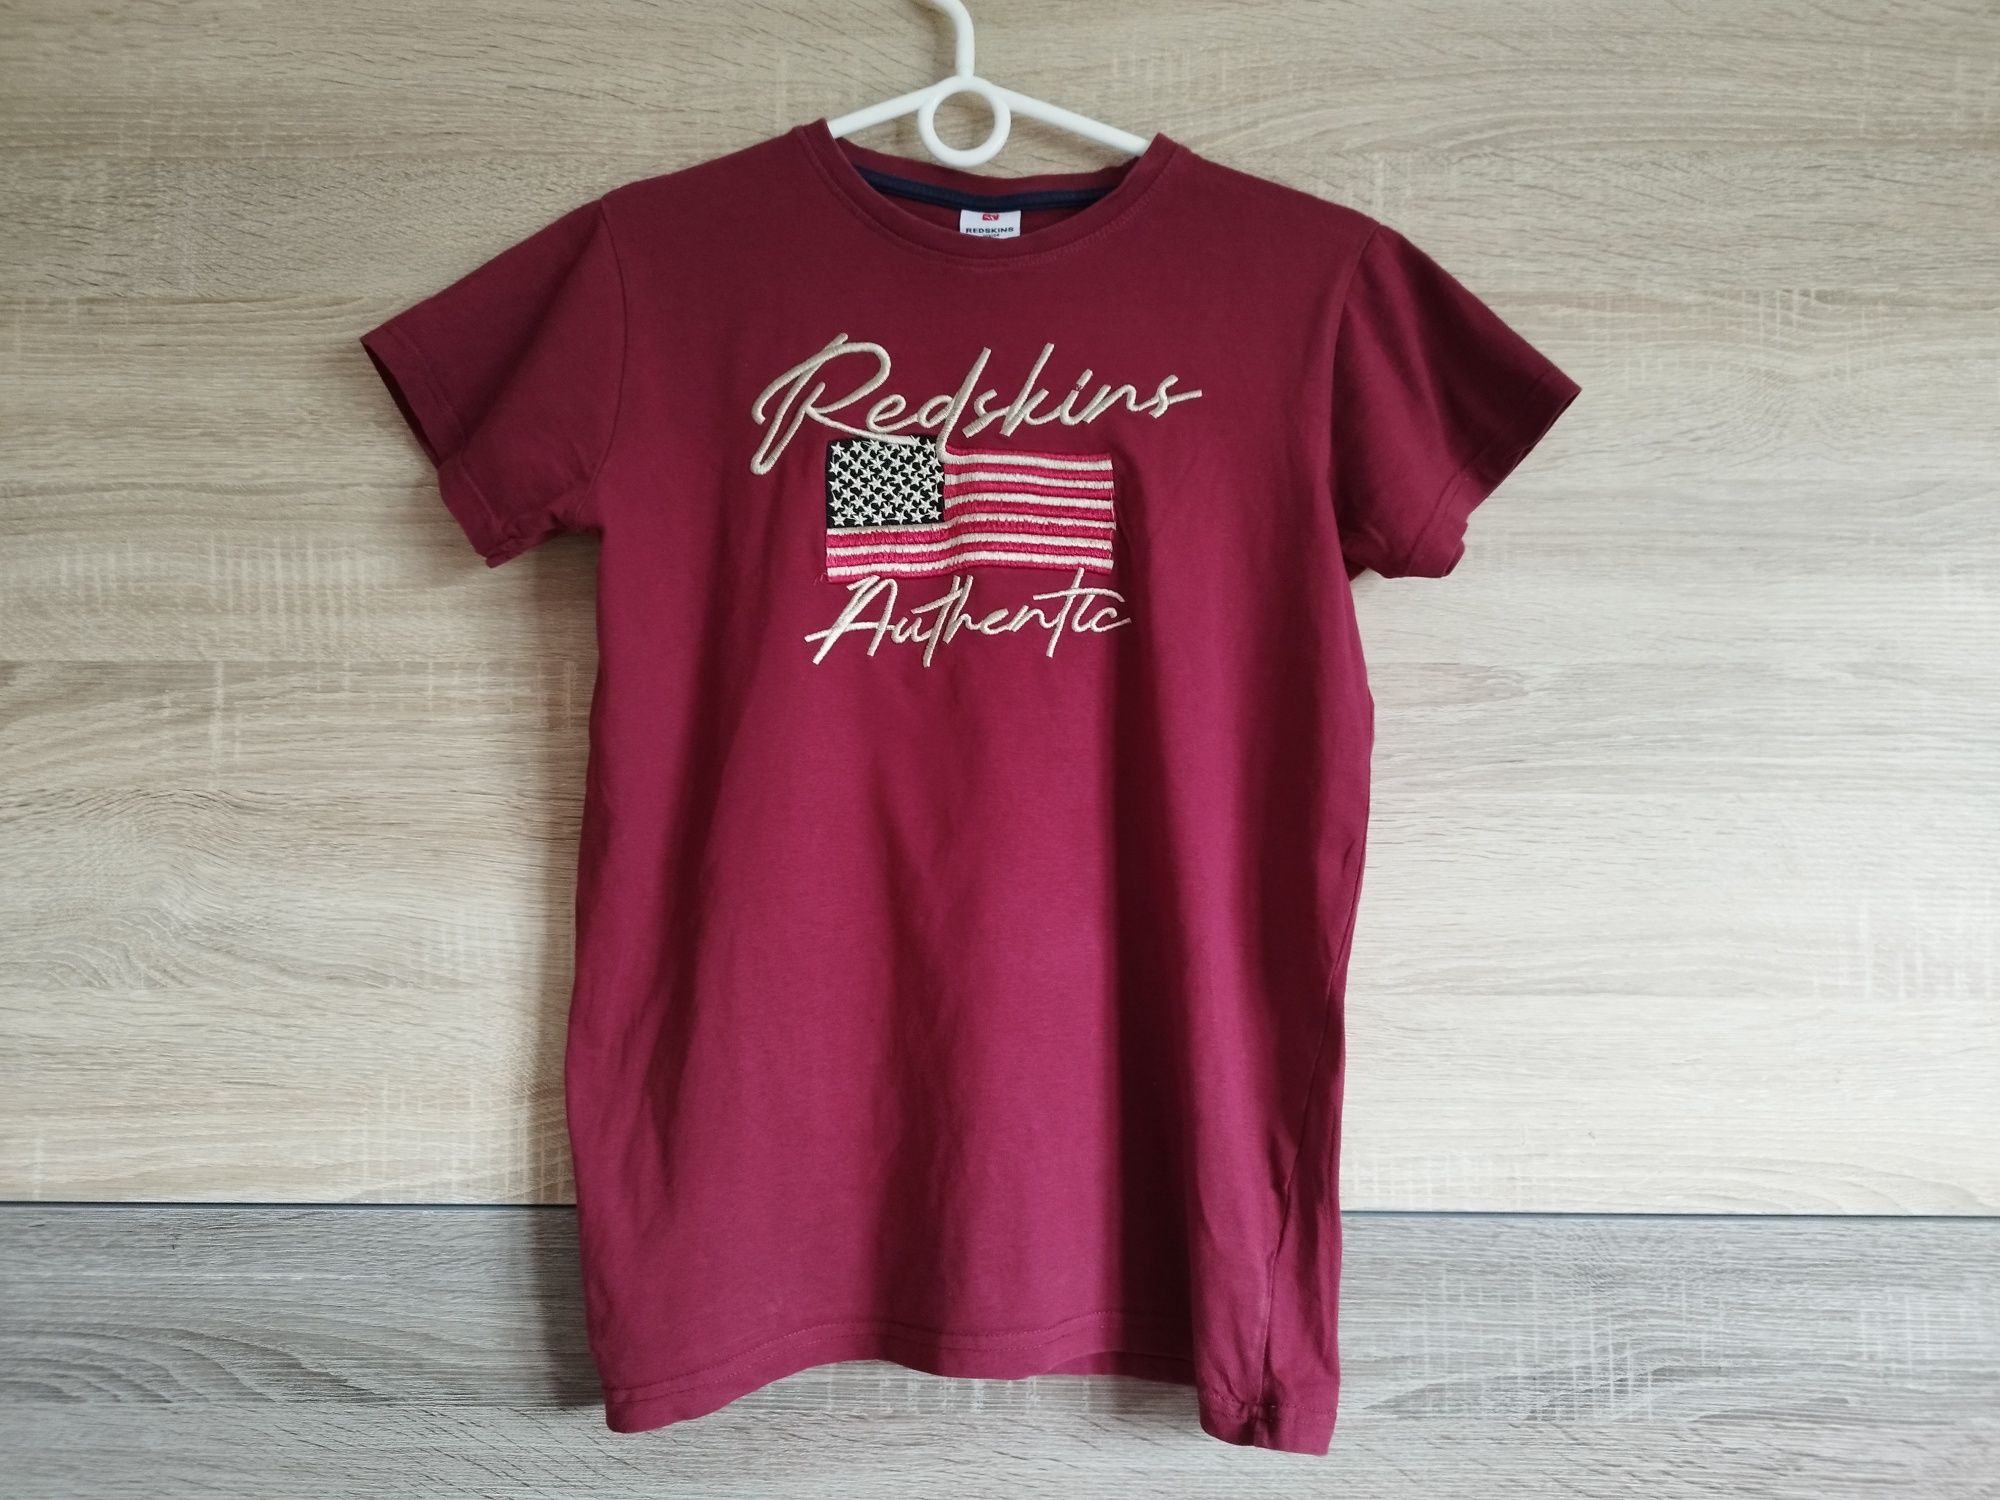 Redskins t-shirt unisex 146-158